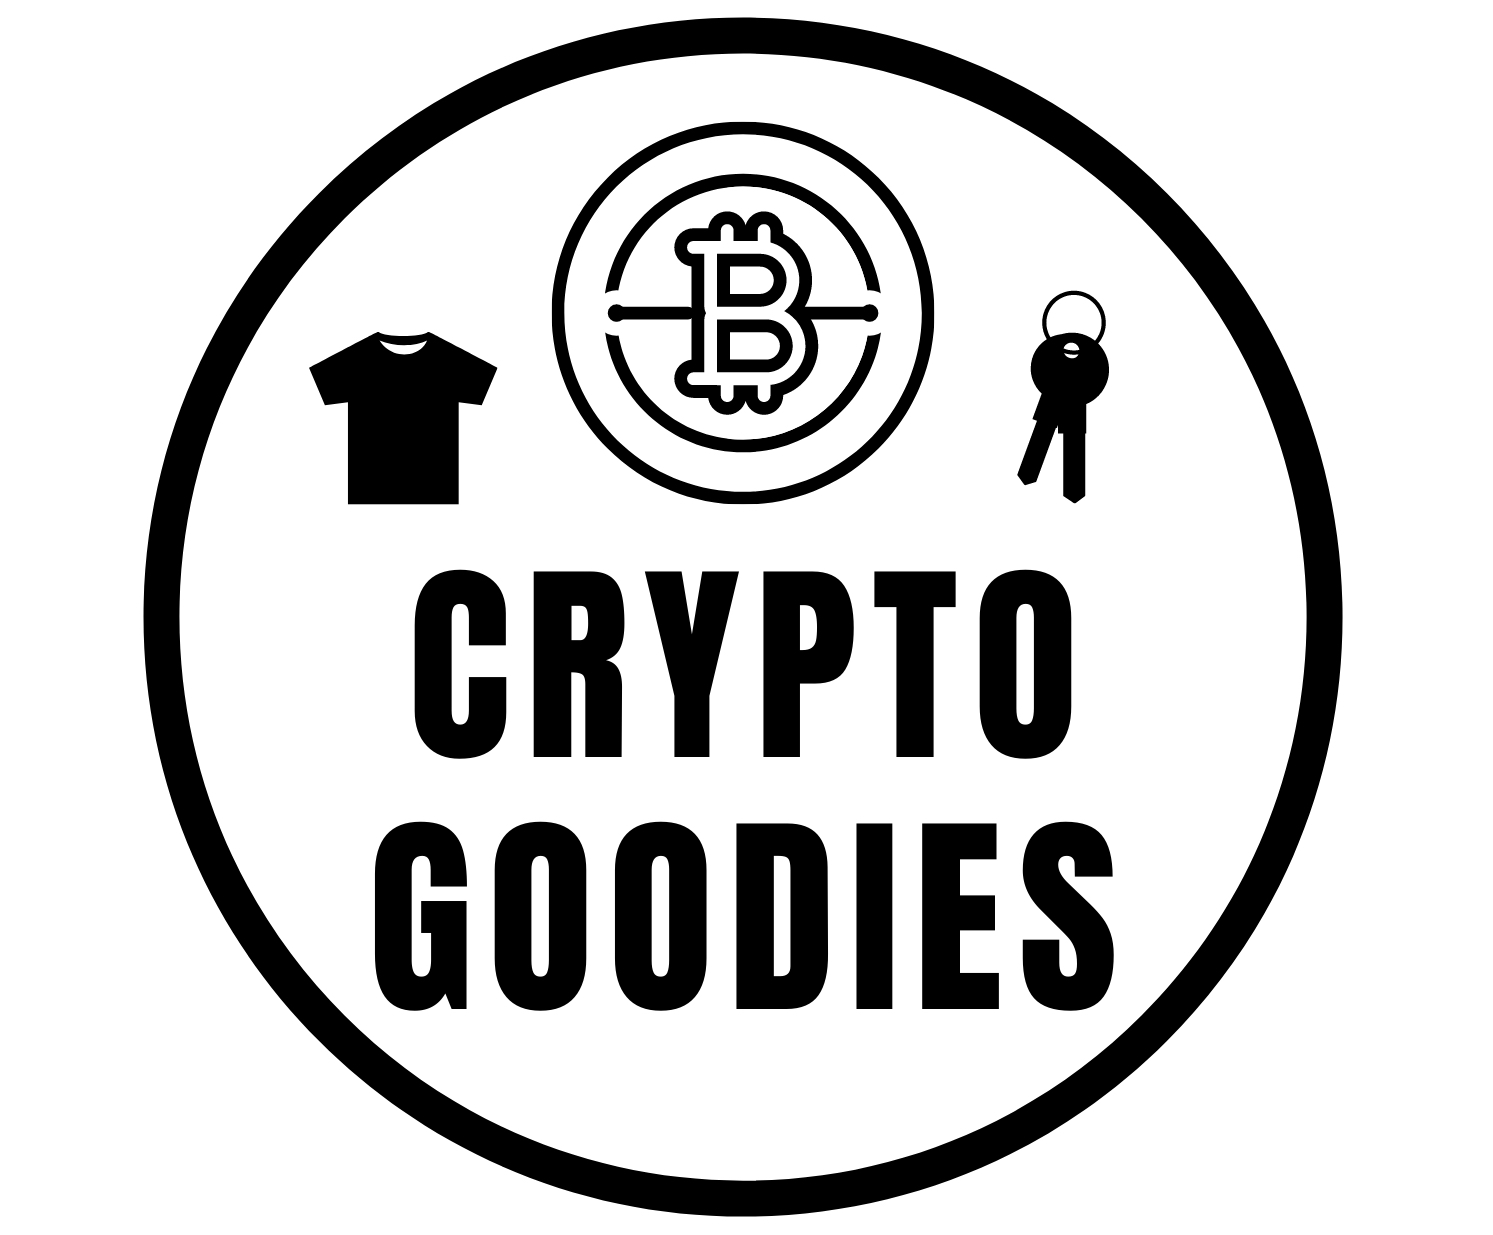 Crypto Goodies